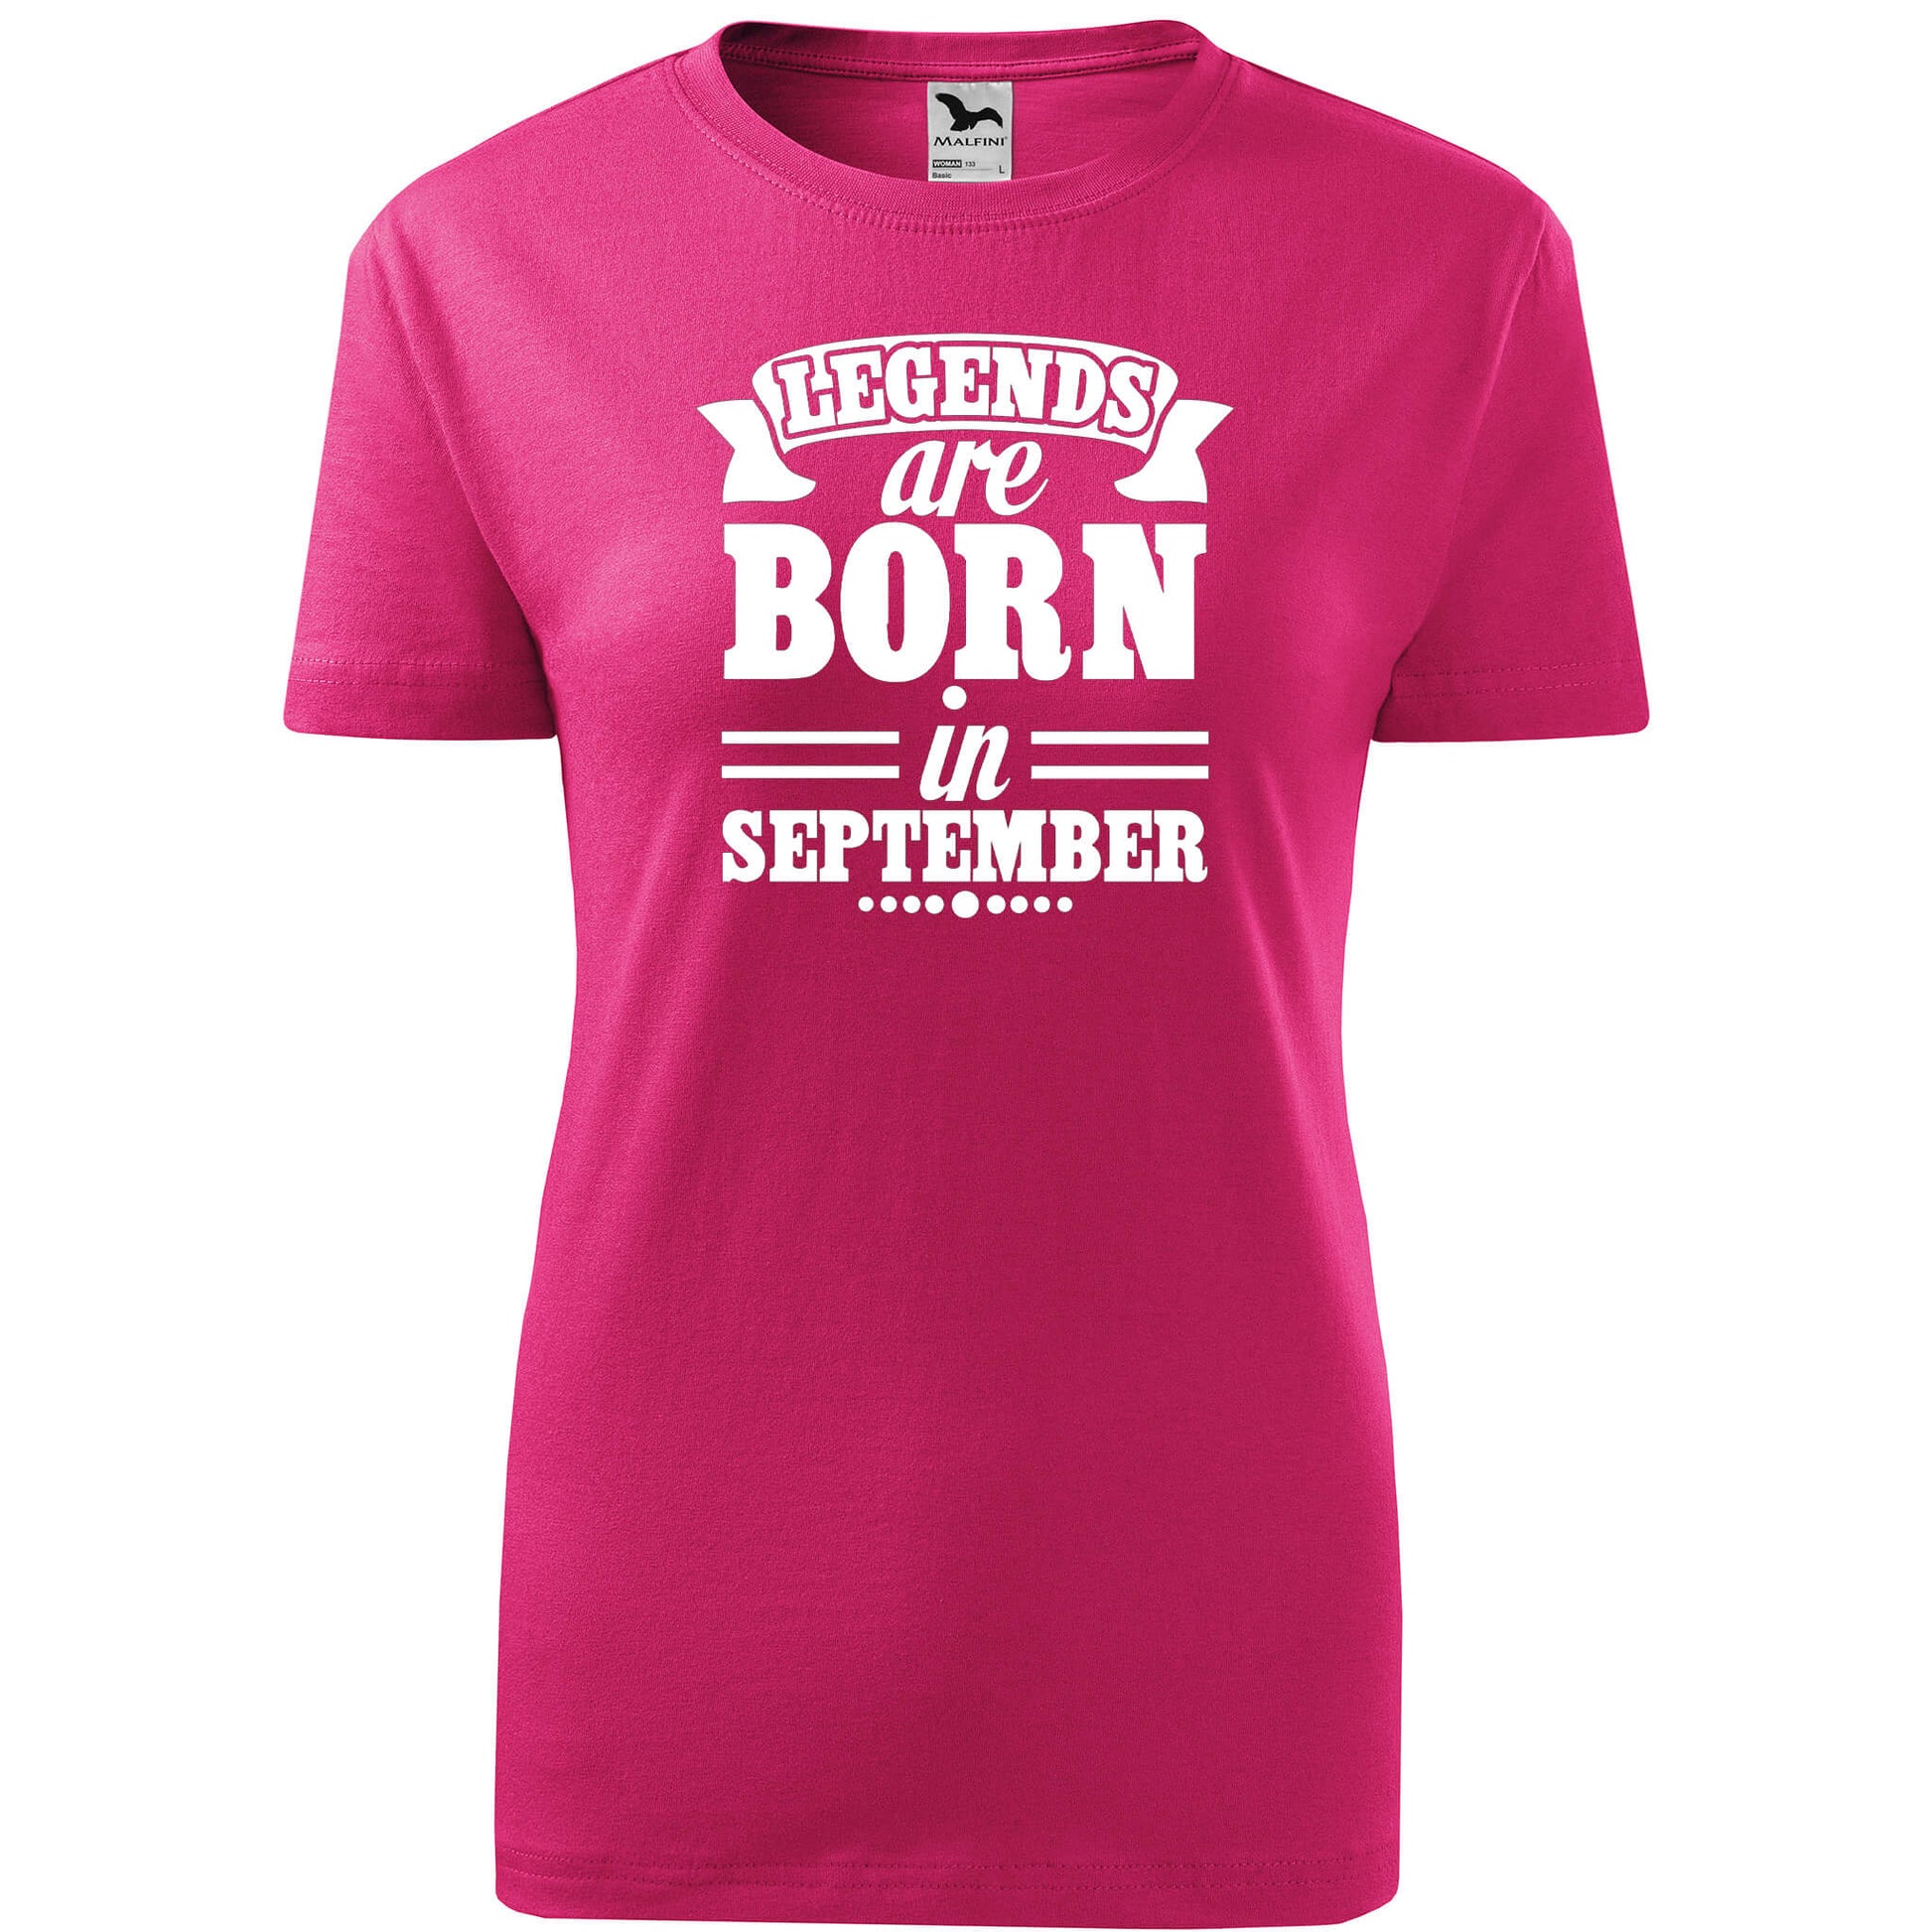 T-shirt - Legends are born in September - Customizable - rvdesignprint